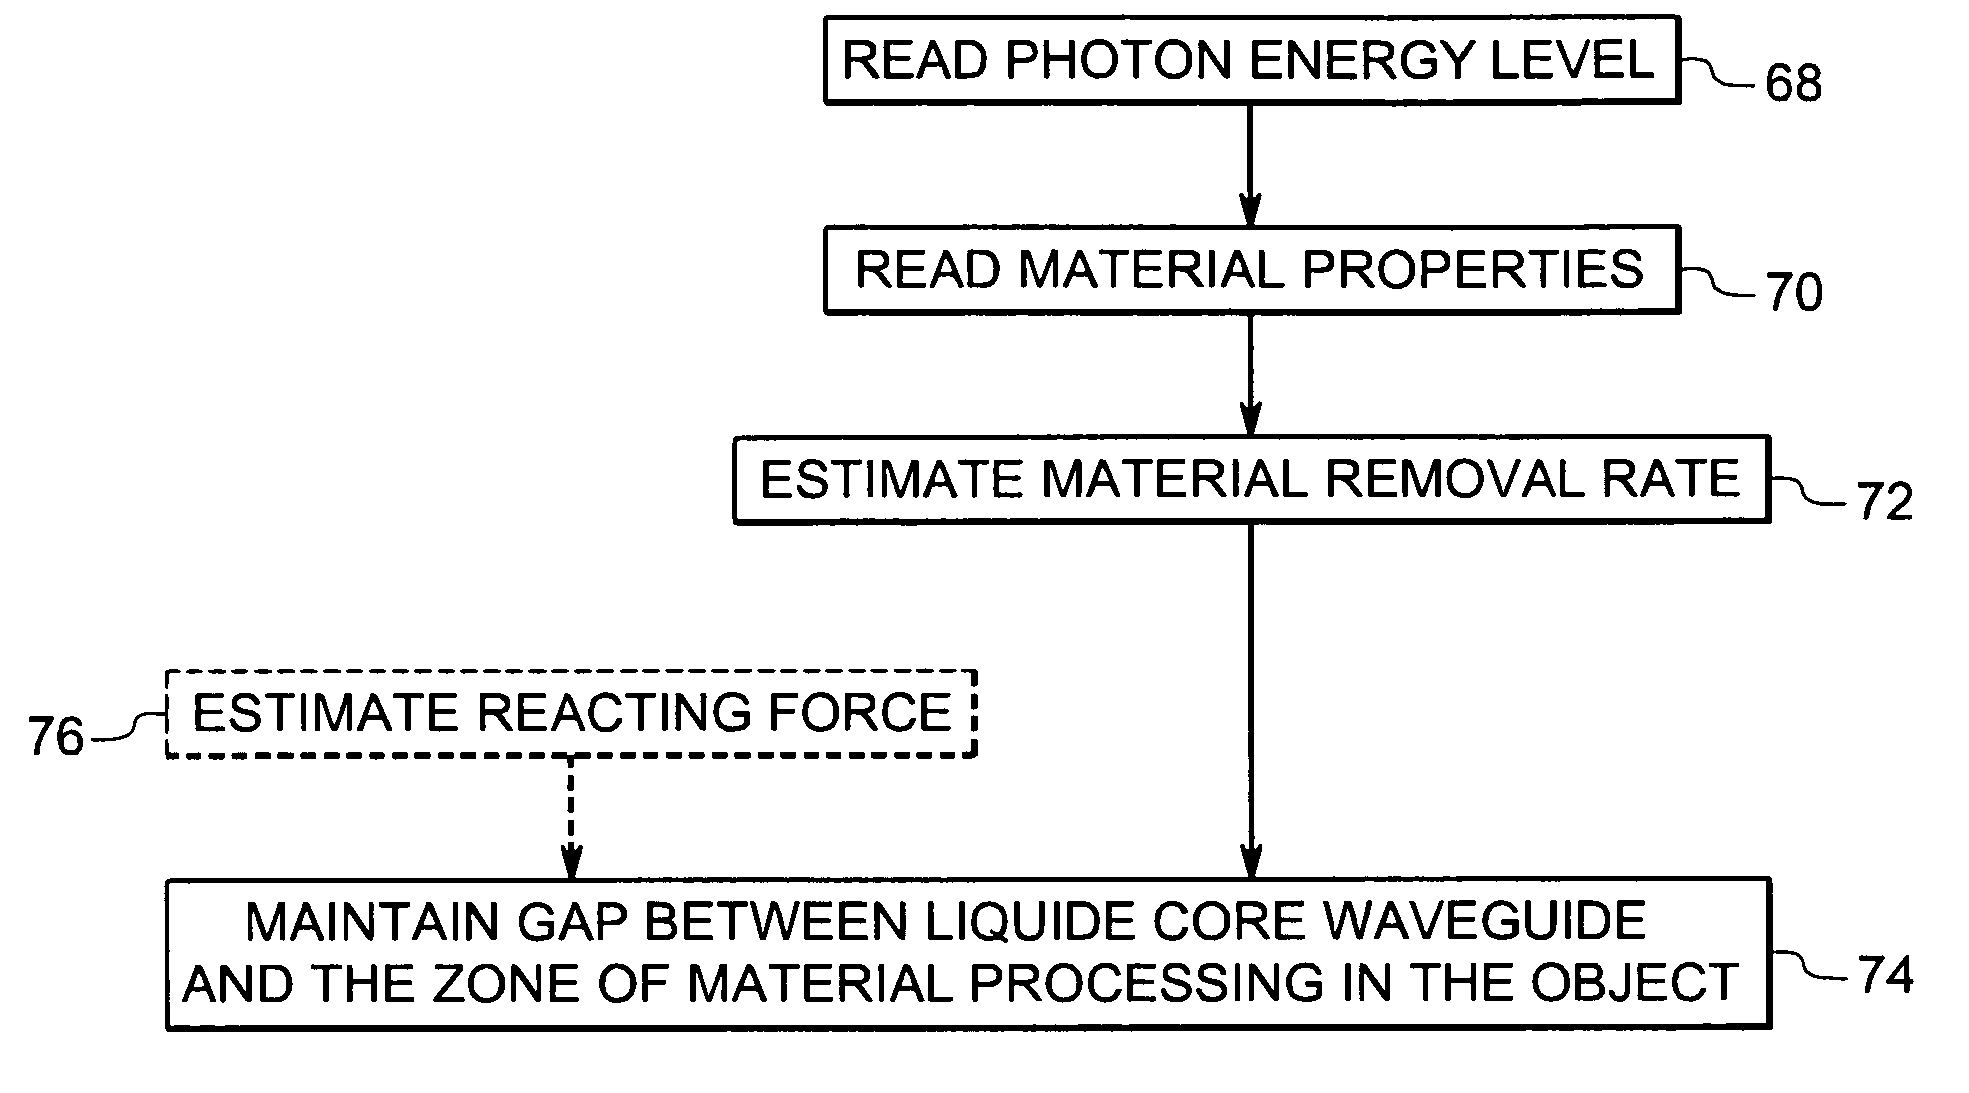 Photon energy material processing using liquid core waveguide